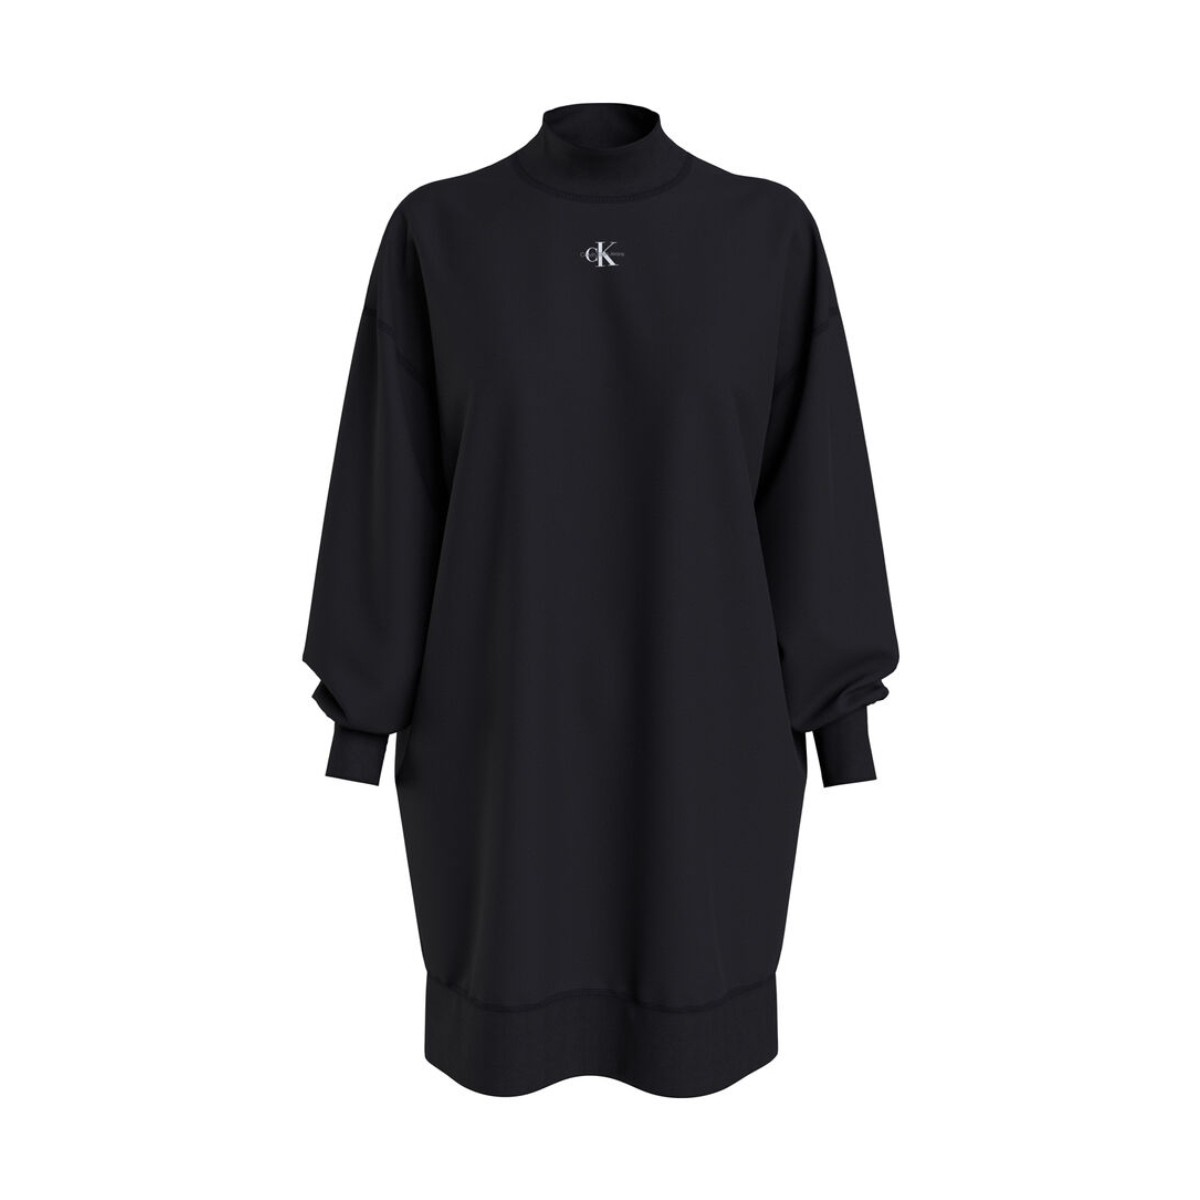 Vêtements Femme Robes Calvin Klein Jeans Robe pull  Ref 58689 BEH Noir Noir